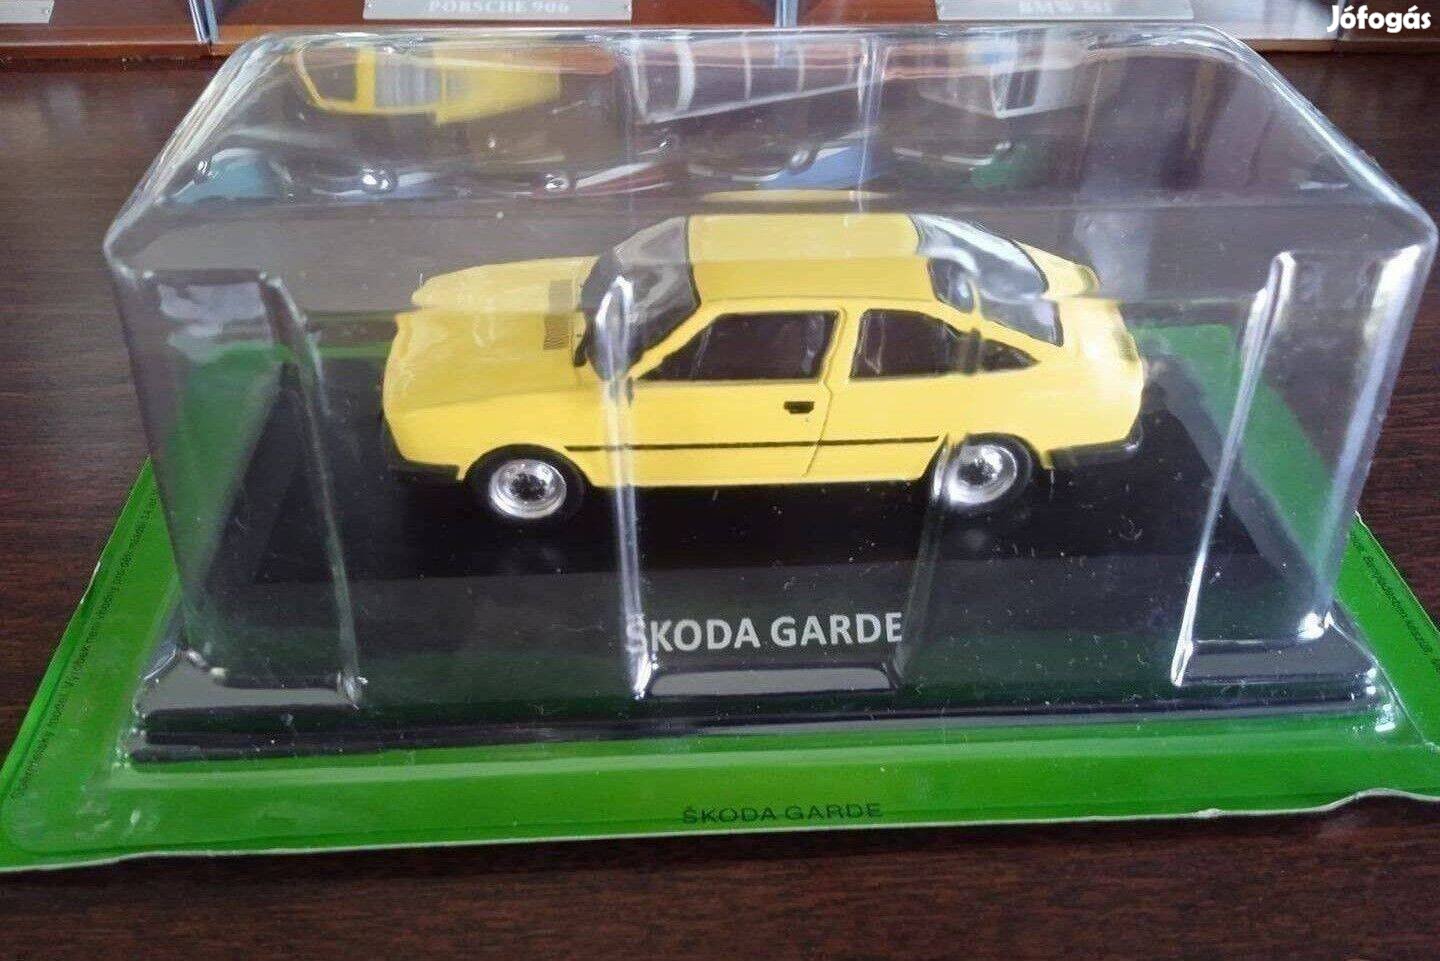 Skoda Garde kisauto modell 1/43 Eladó